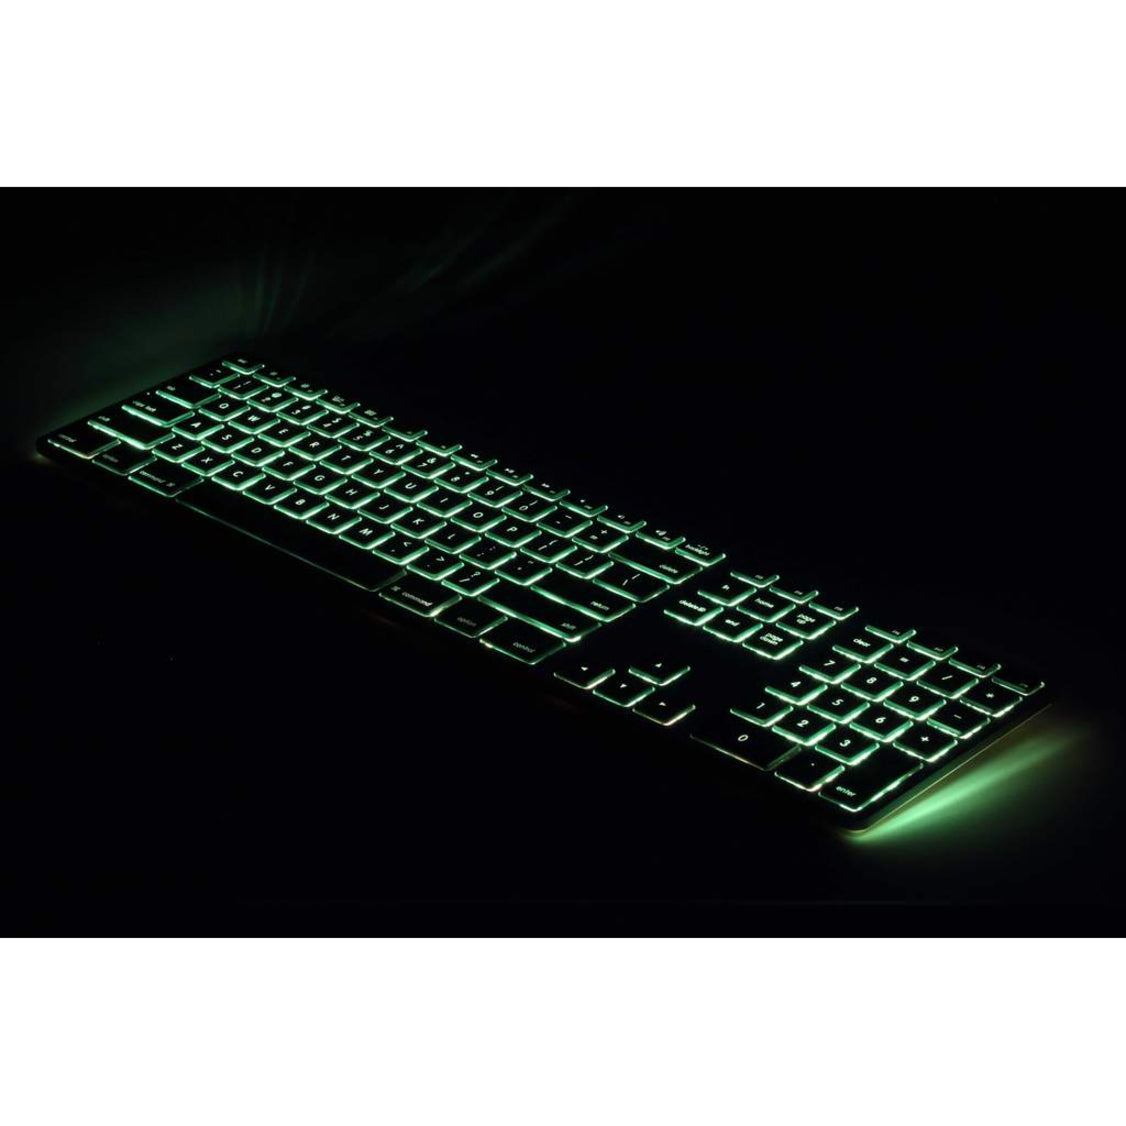 Matias FK318LS RGB Backlit Wired Aluminum Keyboard for Mac - Silver, English (US), 104 Keys, Scissors Keyswitch Technology